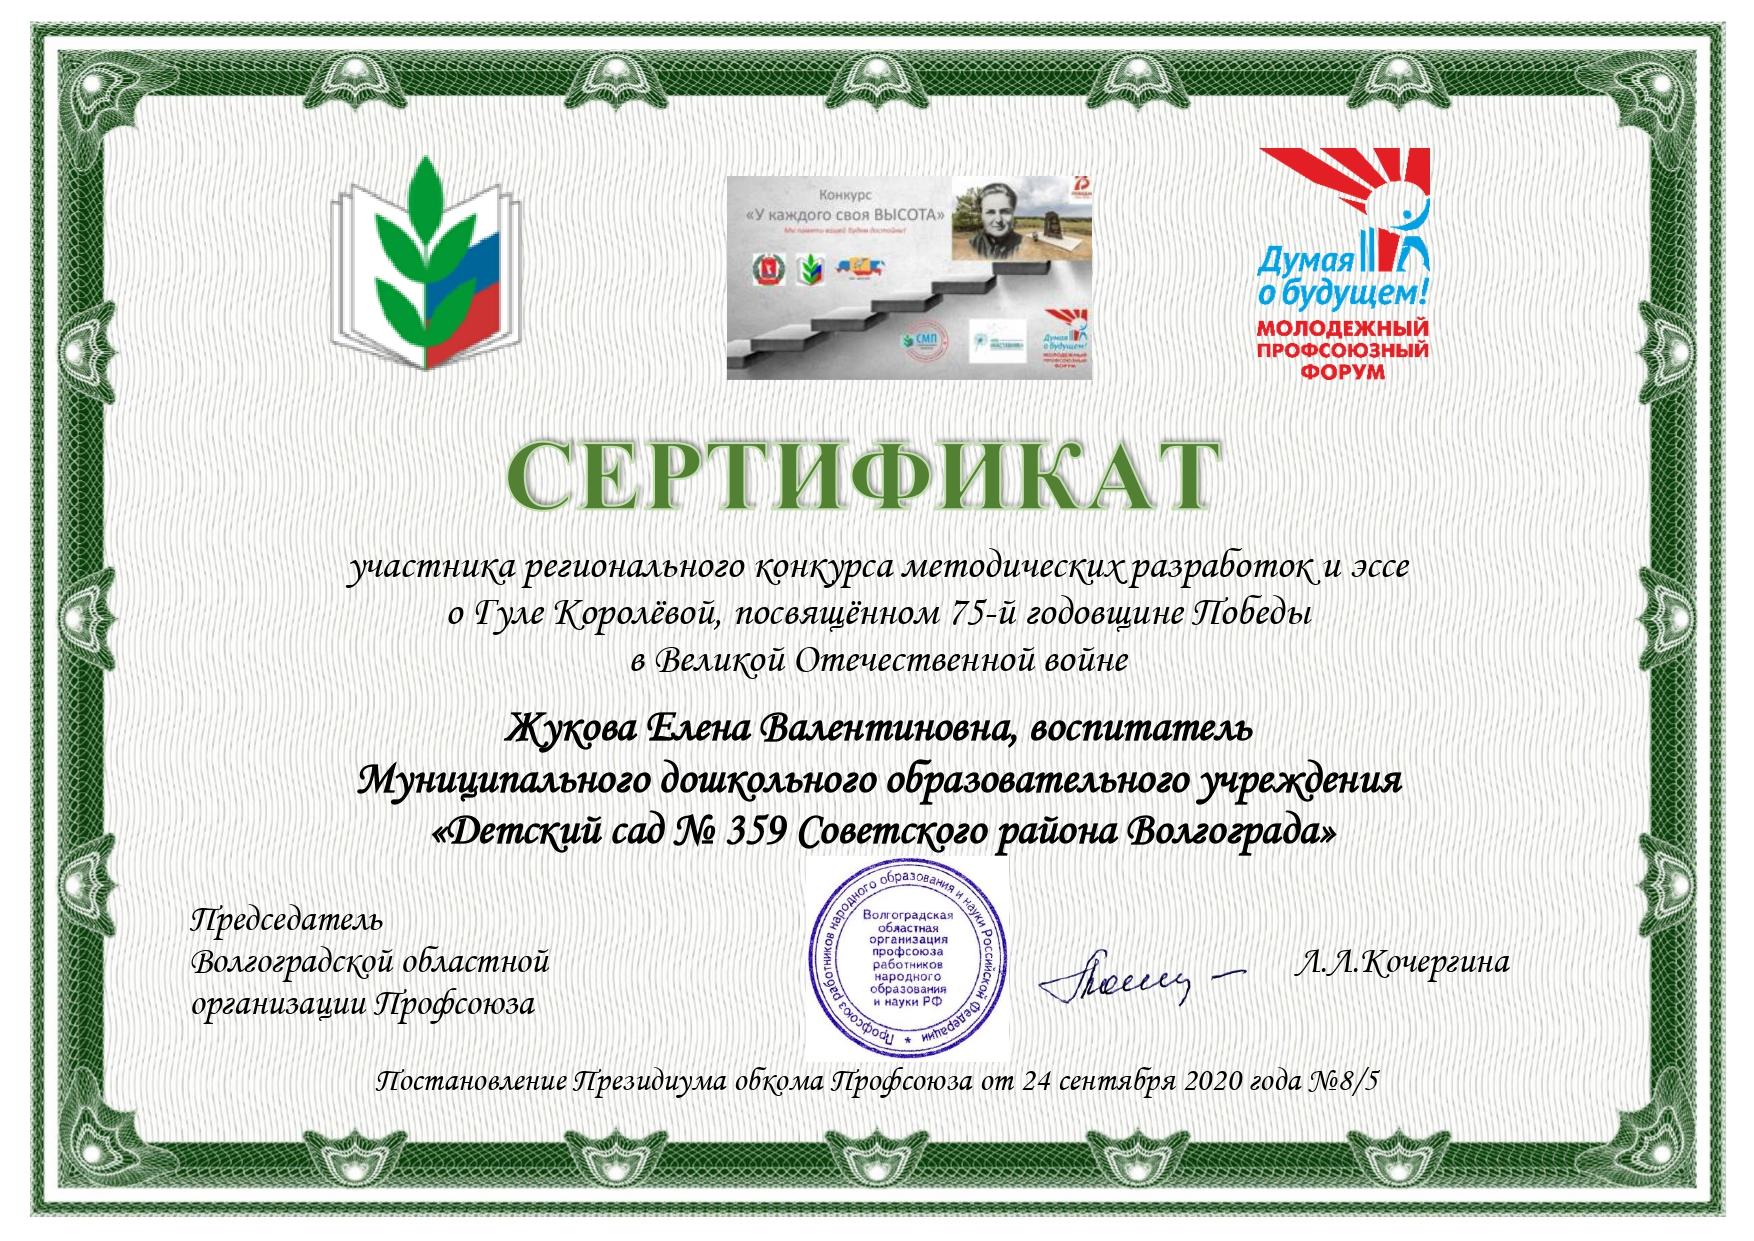 Сертификат конкурса Жукова_page-0001.jpg